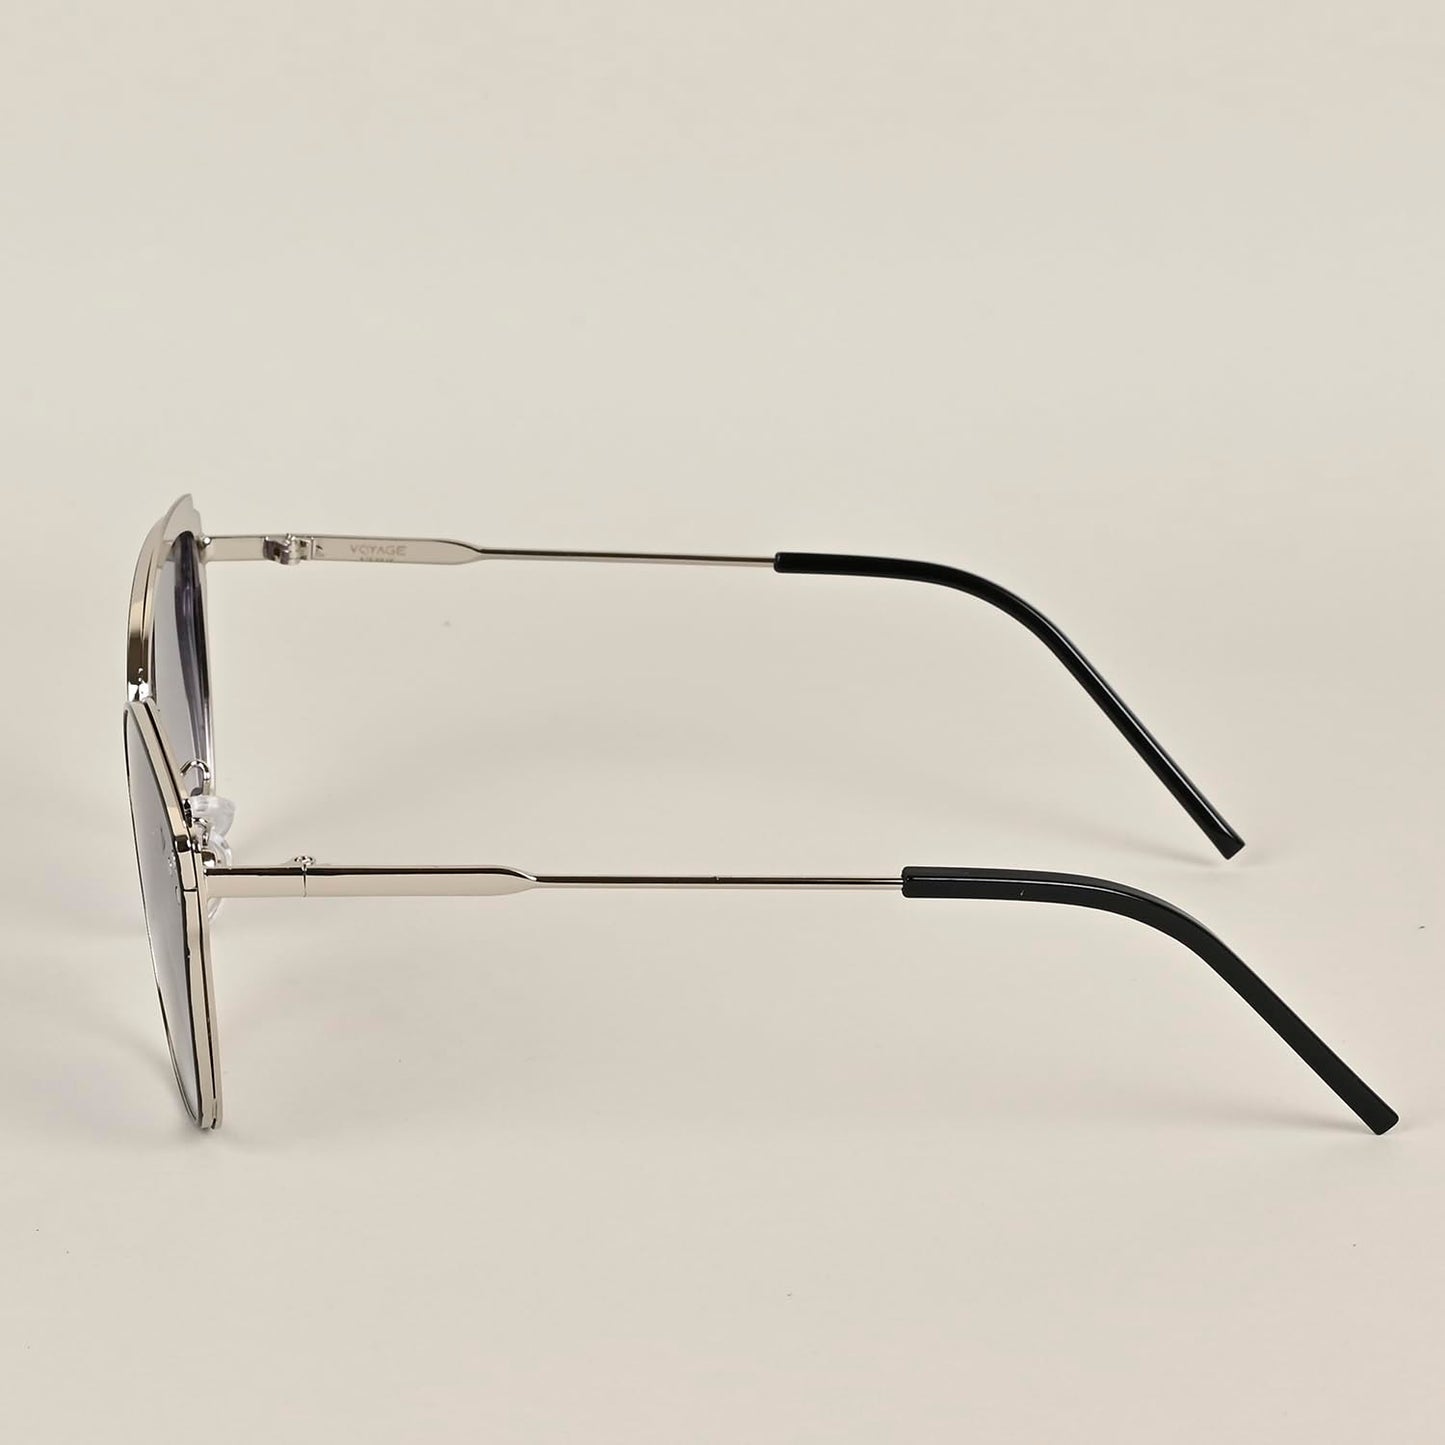 Voyage Stylish Cat-Eye Sunglasses For Women (Grey)